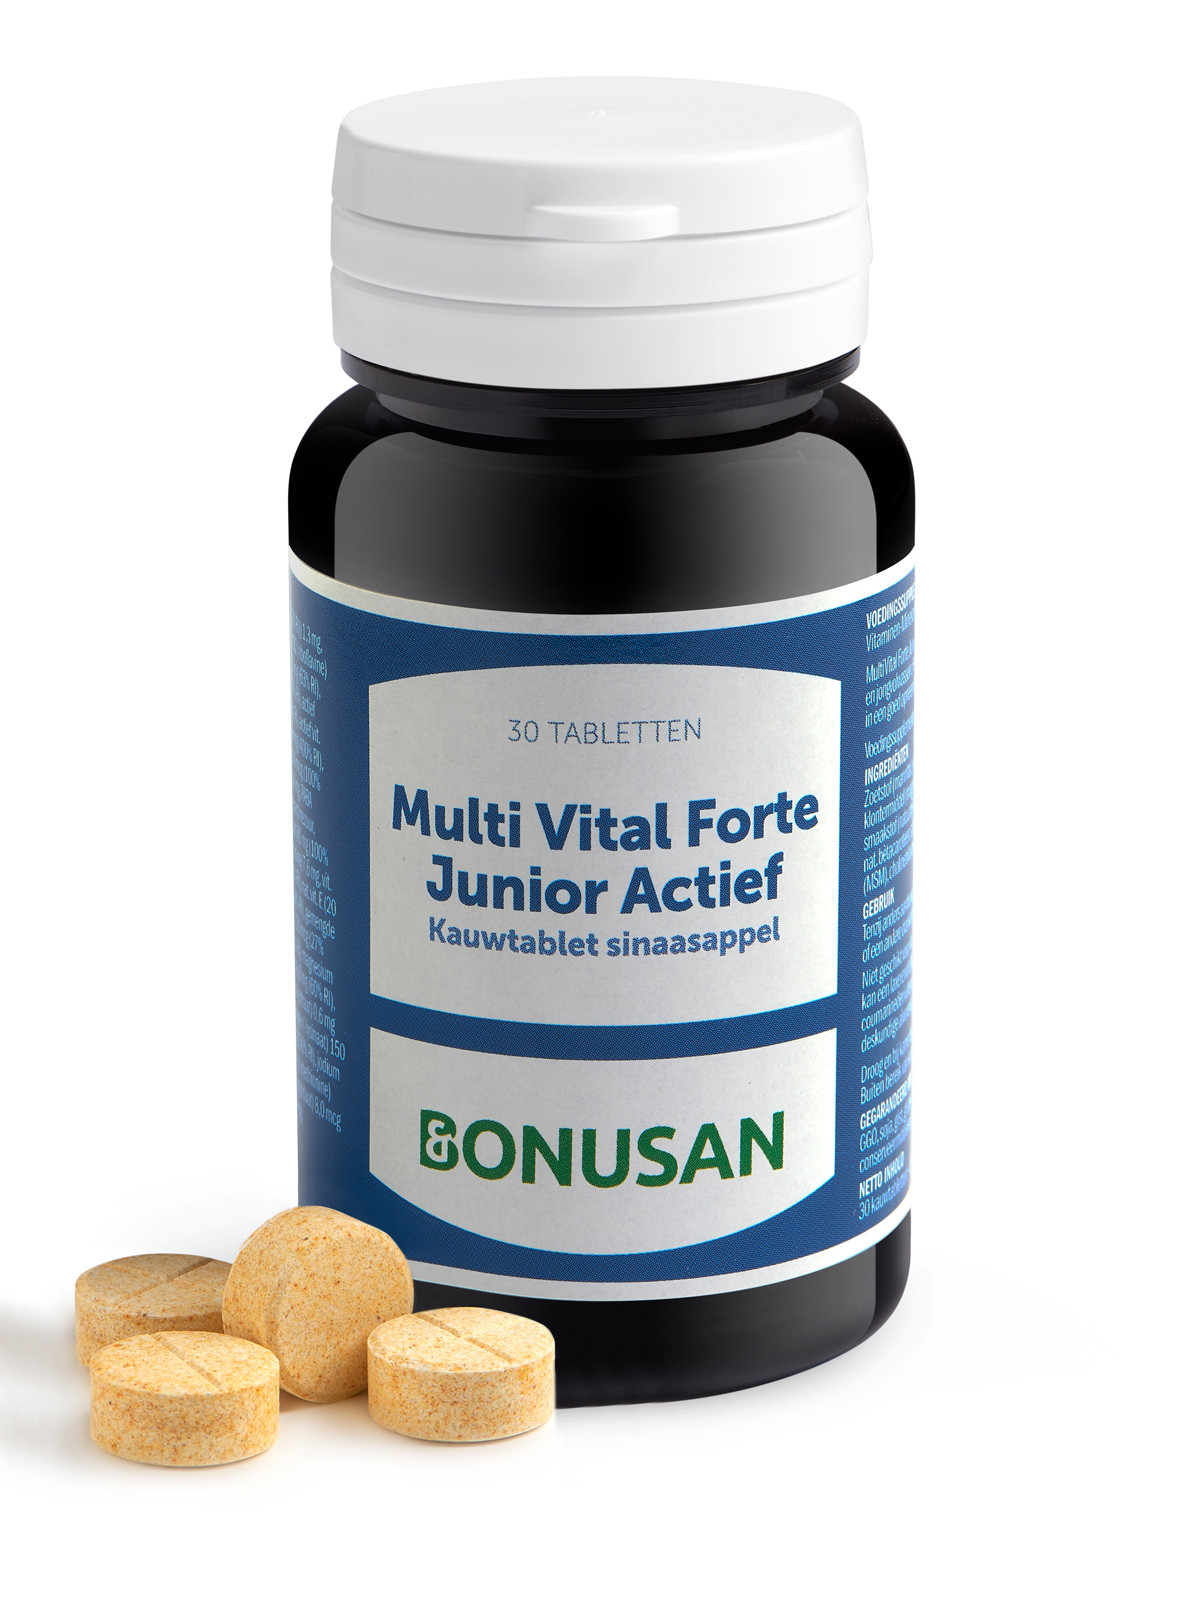 Bonusan - Multi Vital Forte junior actief - 30 stuks